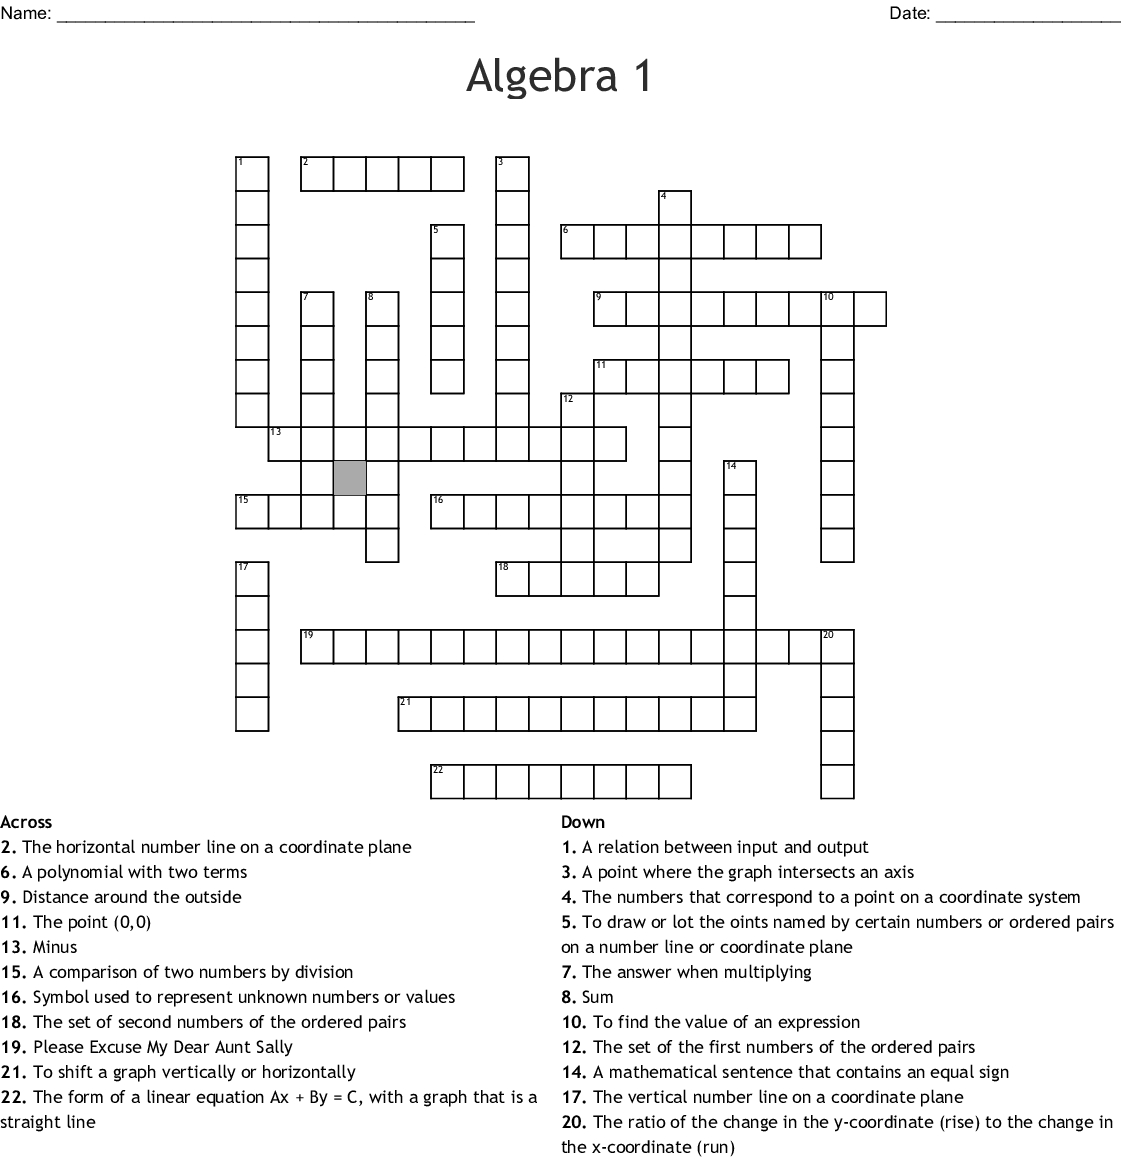 Algebra 1 Crossword - Wordmint - Printable Crossword #1